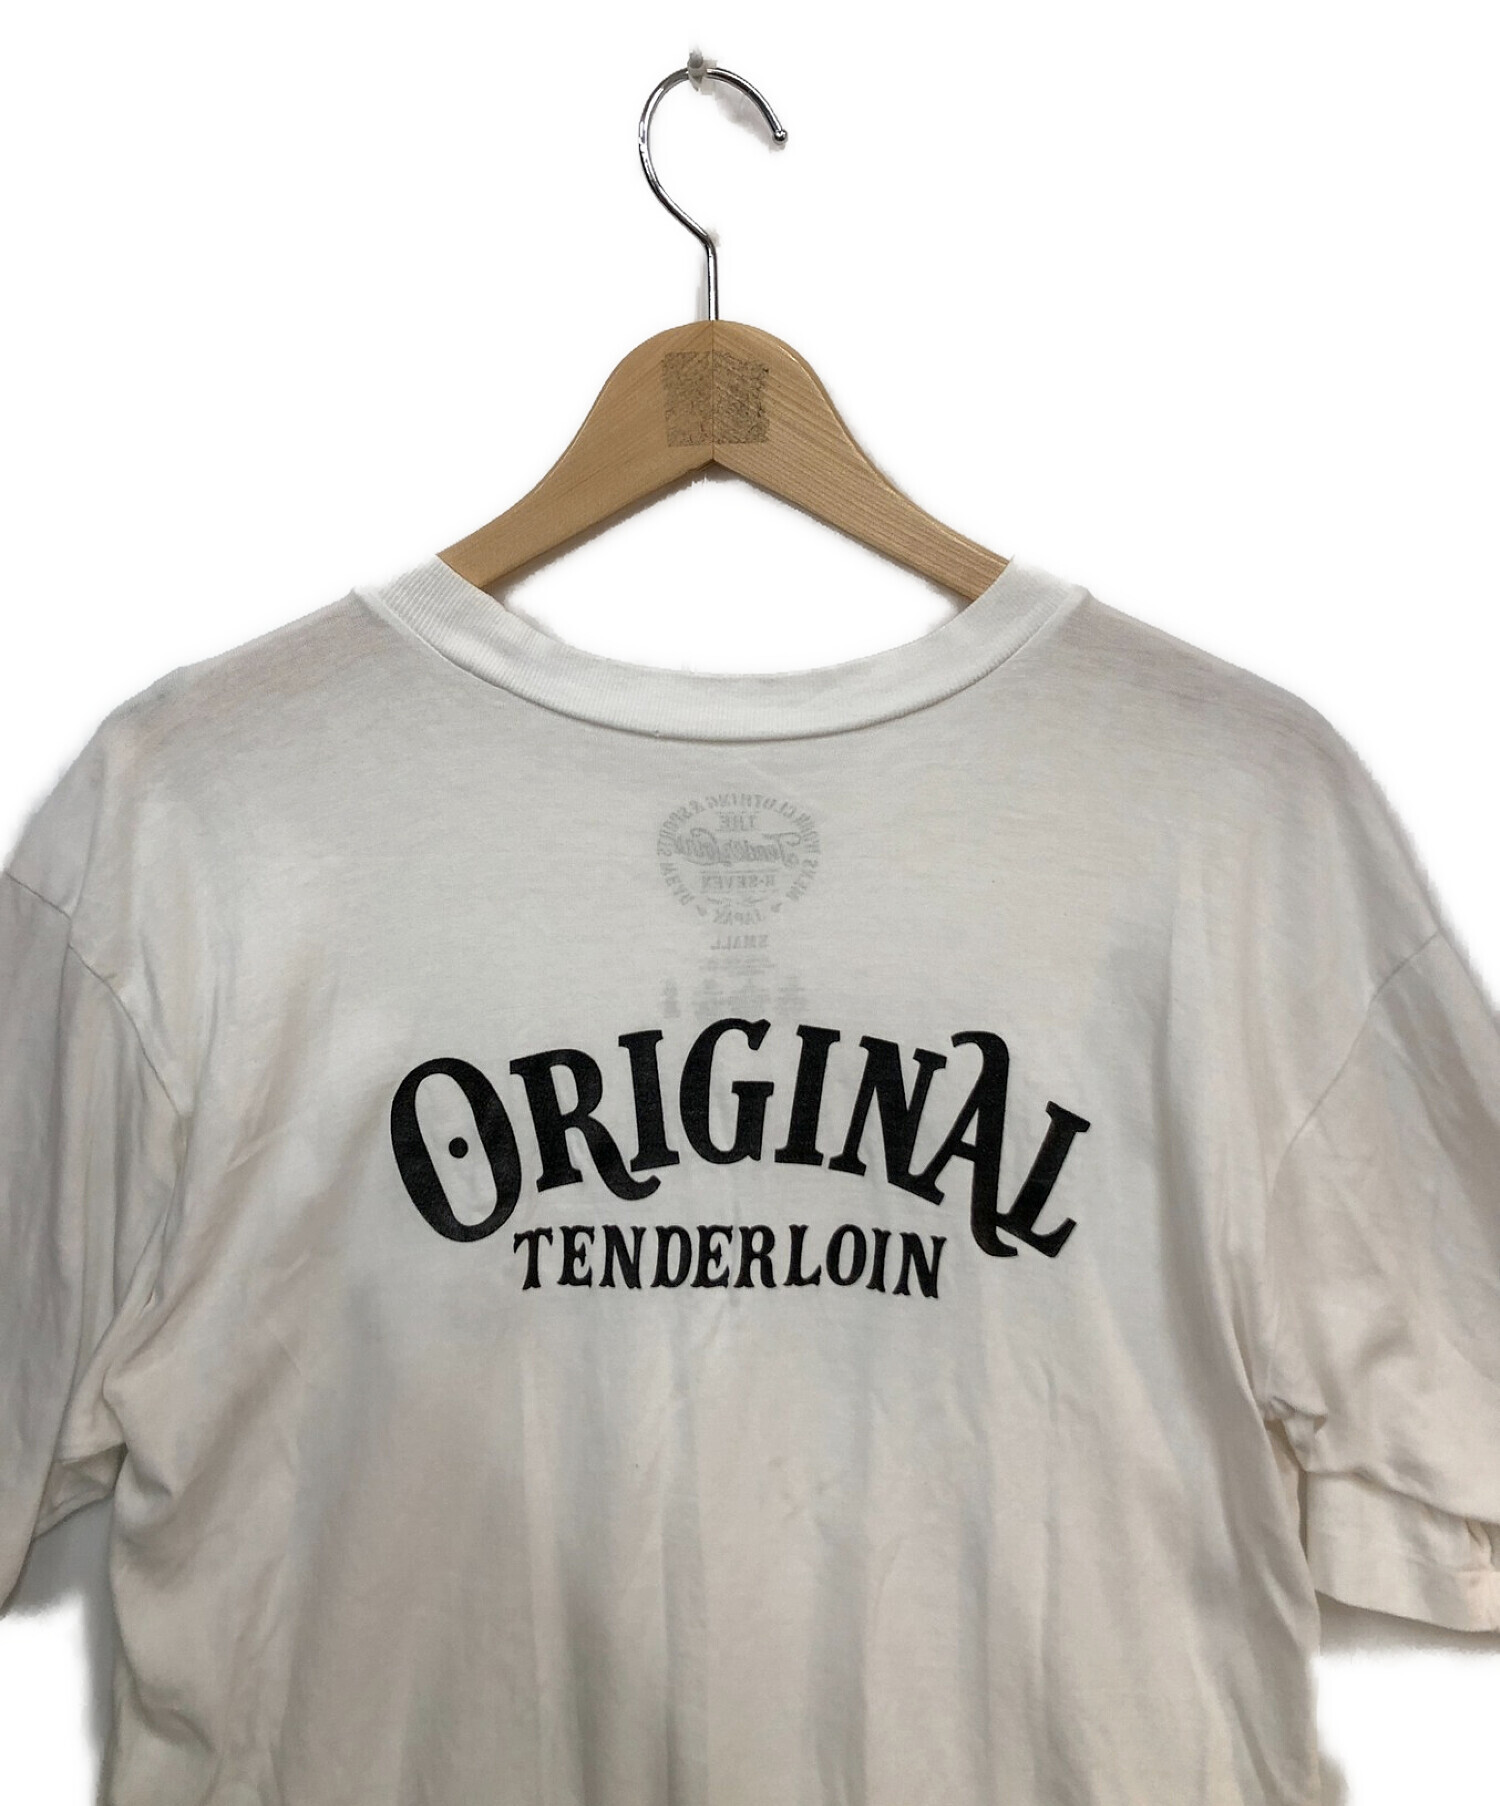 TENDERLOIN (テンダーロイン) Tシャツ ホワイト サイズ:S